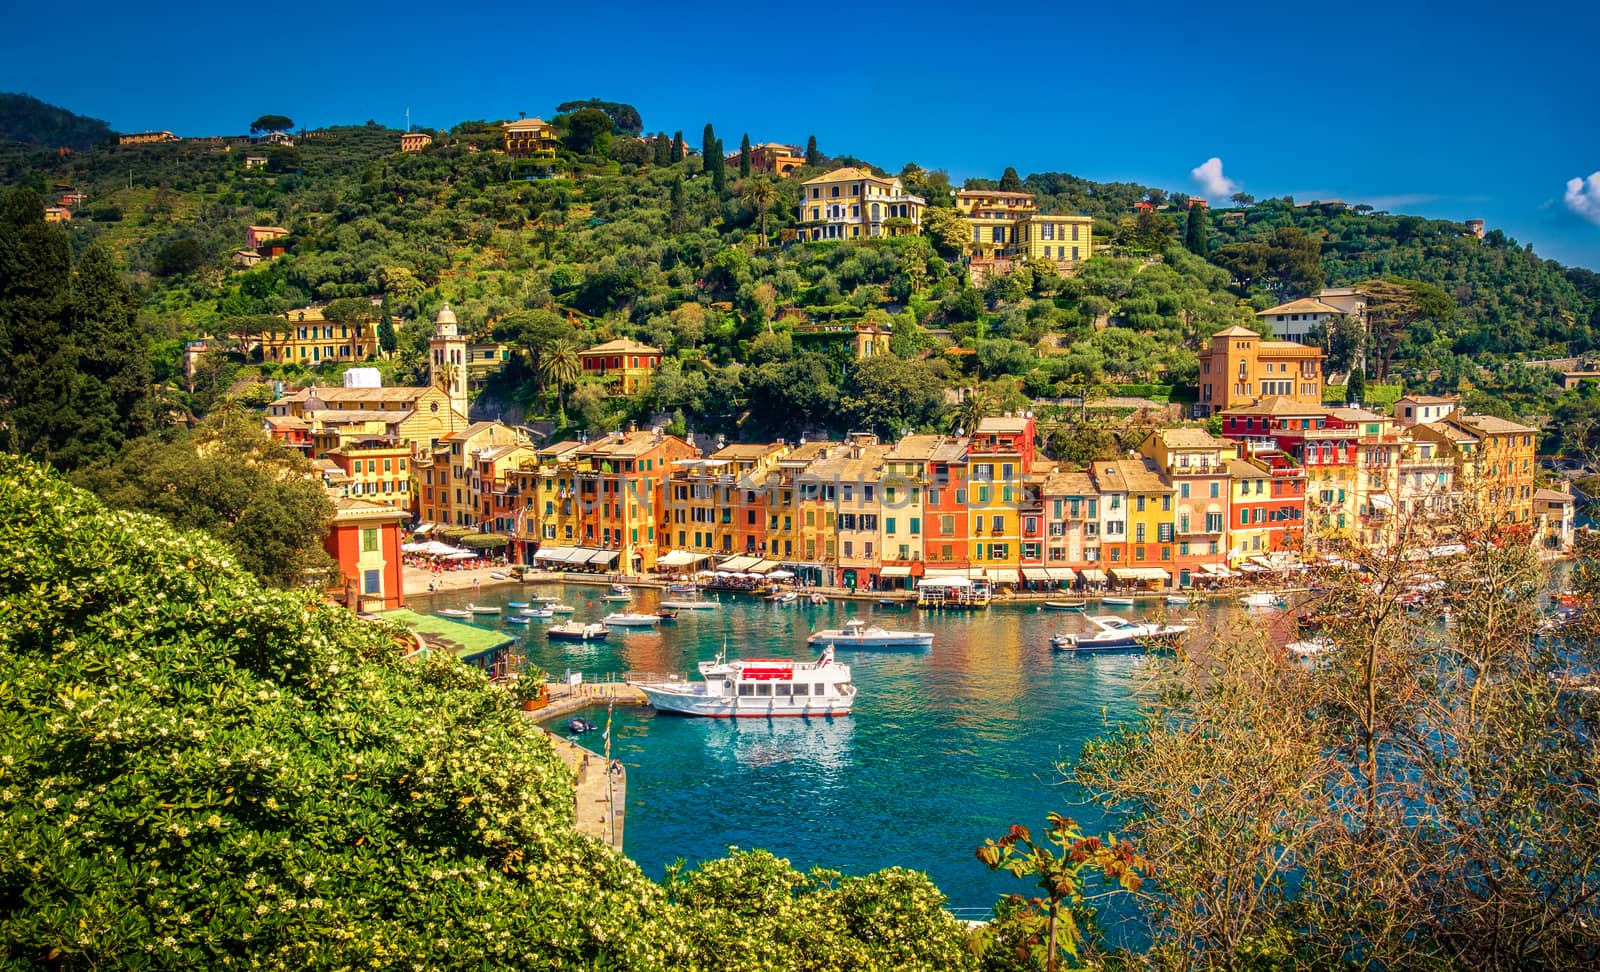 Portofino picturesque ligurian colourful town - Genoa - Italy by LucaLorenzelli